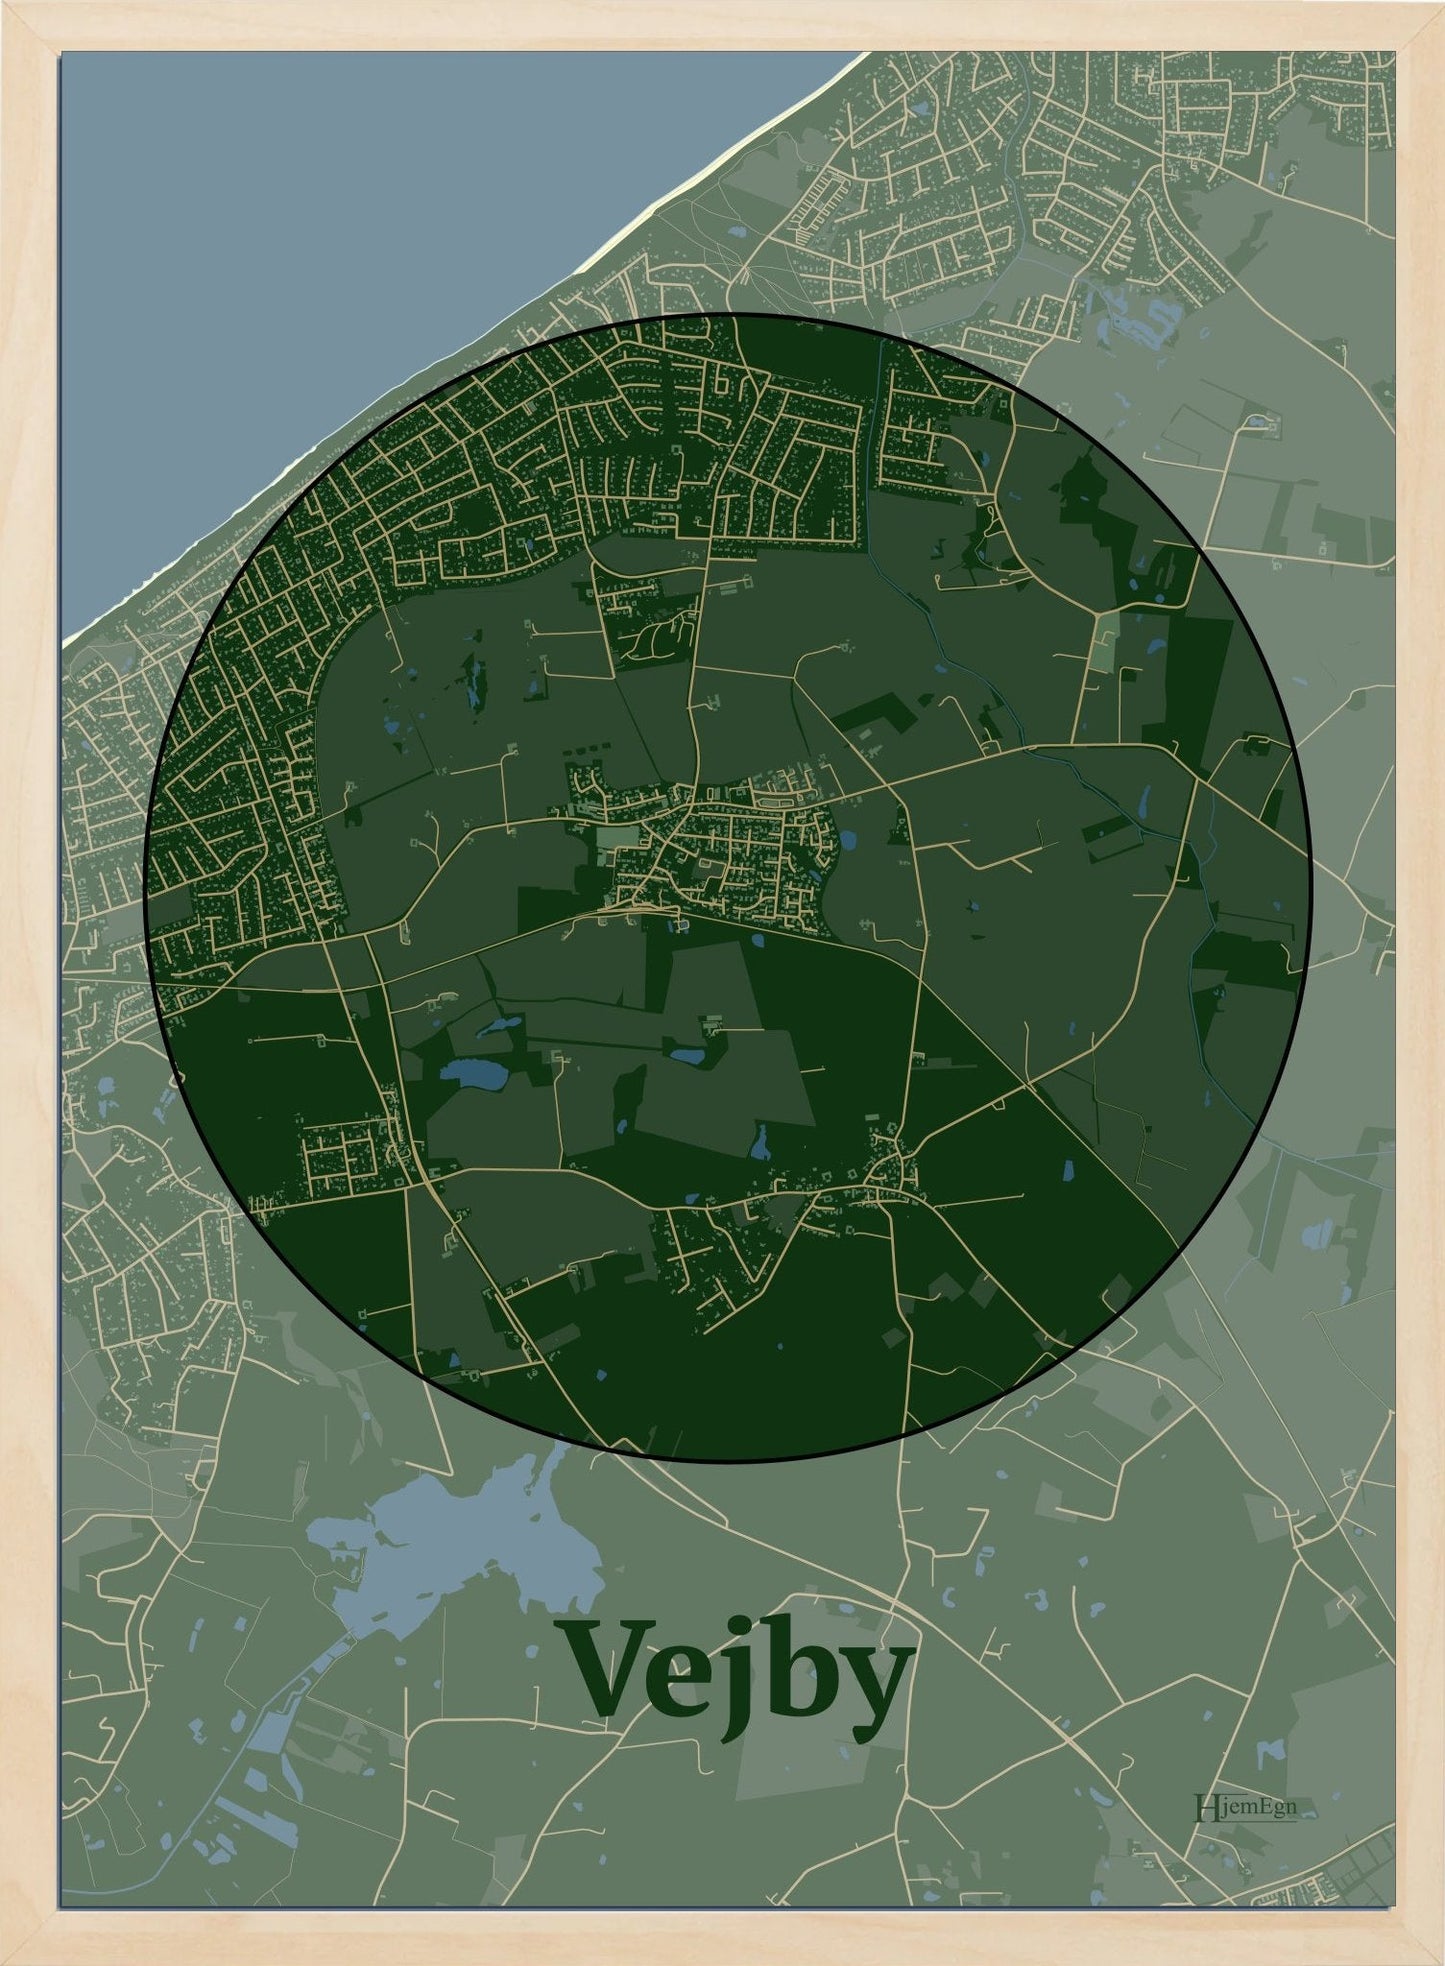 Vejby plakat i farve mørk grøn og HjemEgn.dk design centrum. Design bykort for Vejby